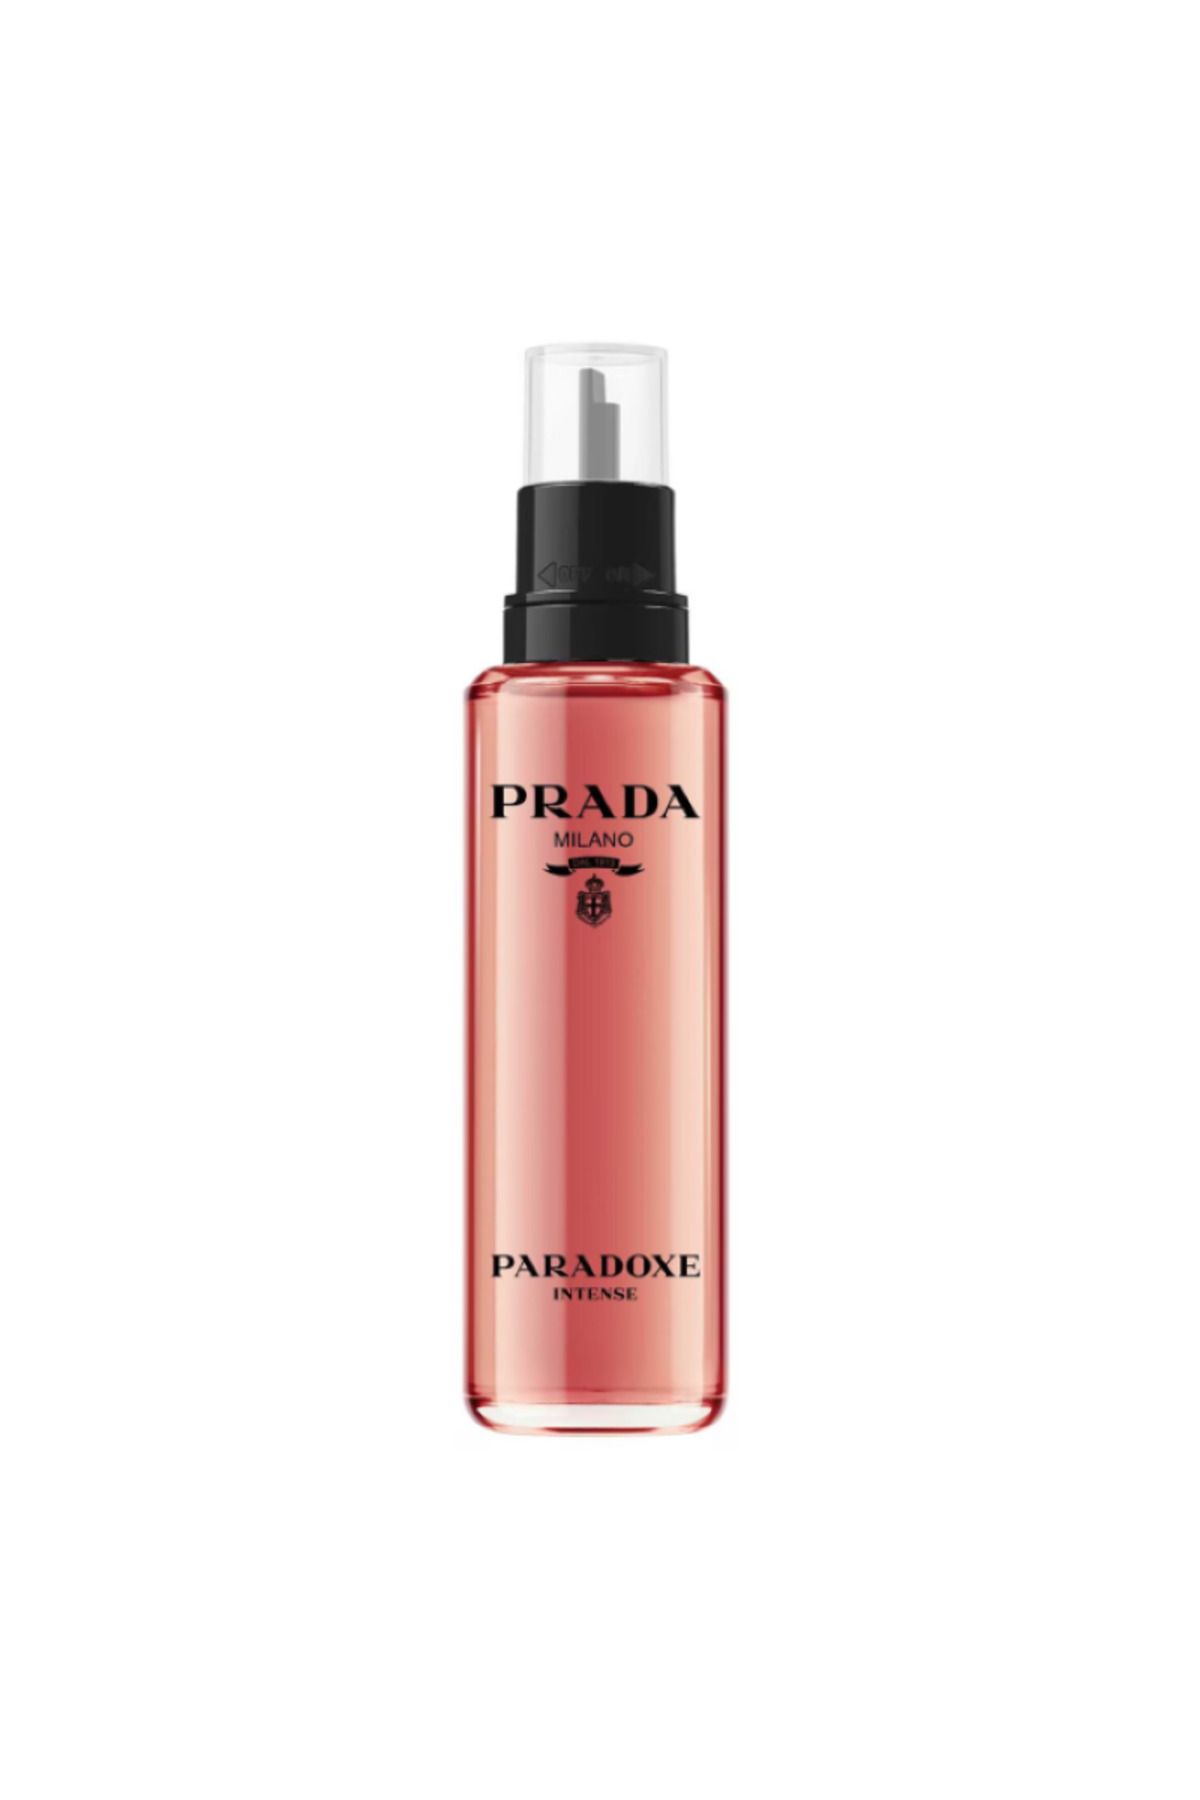 Prada Paradoxe Intense - Eau de Parfum Recharge Hem Güçlü Hem De Hassas 100 ml